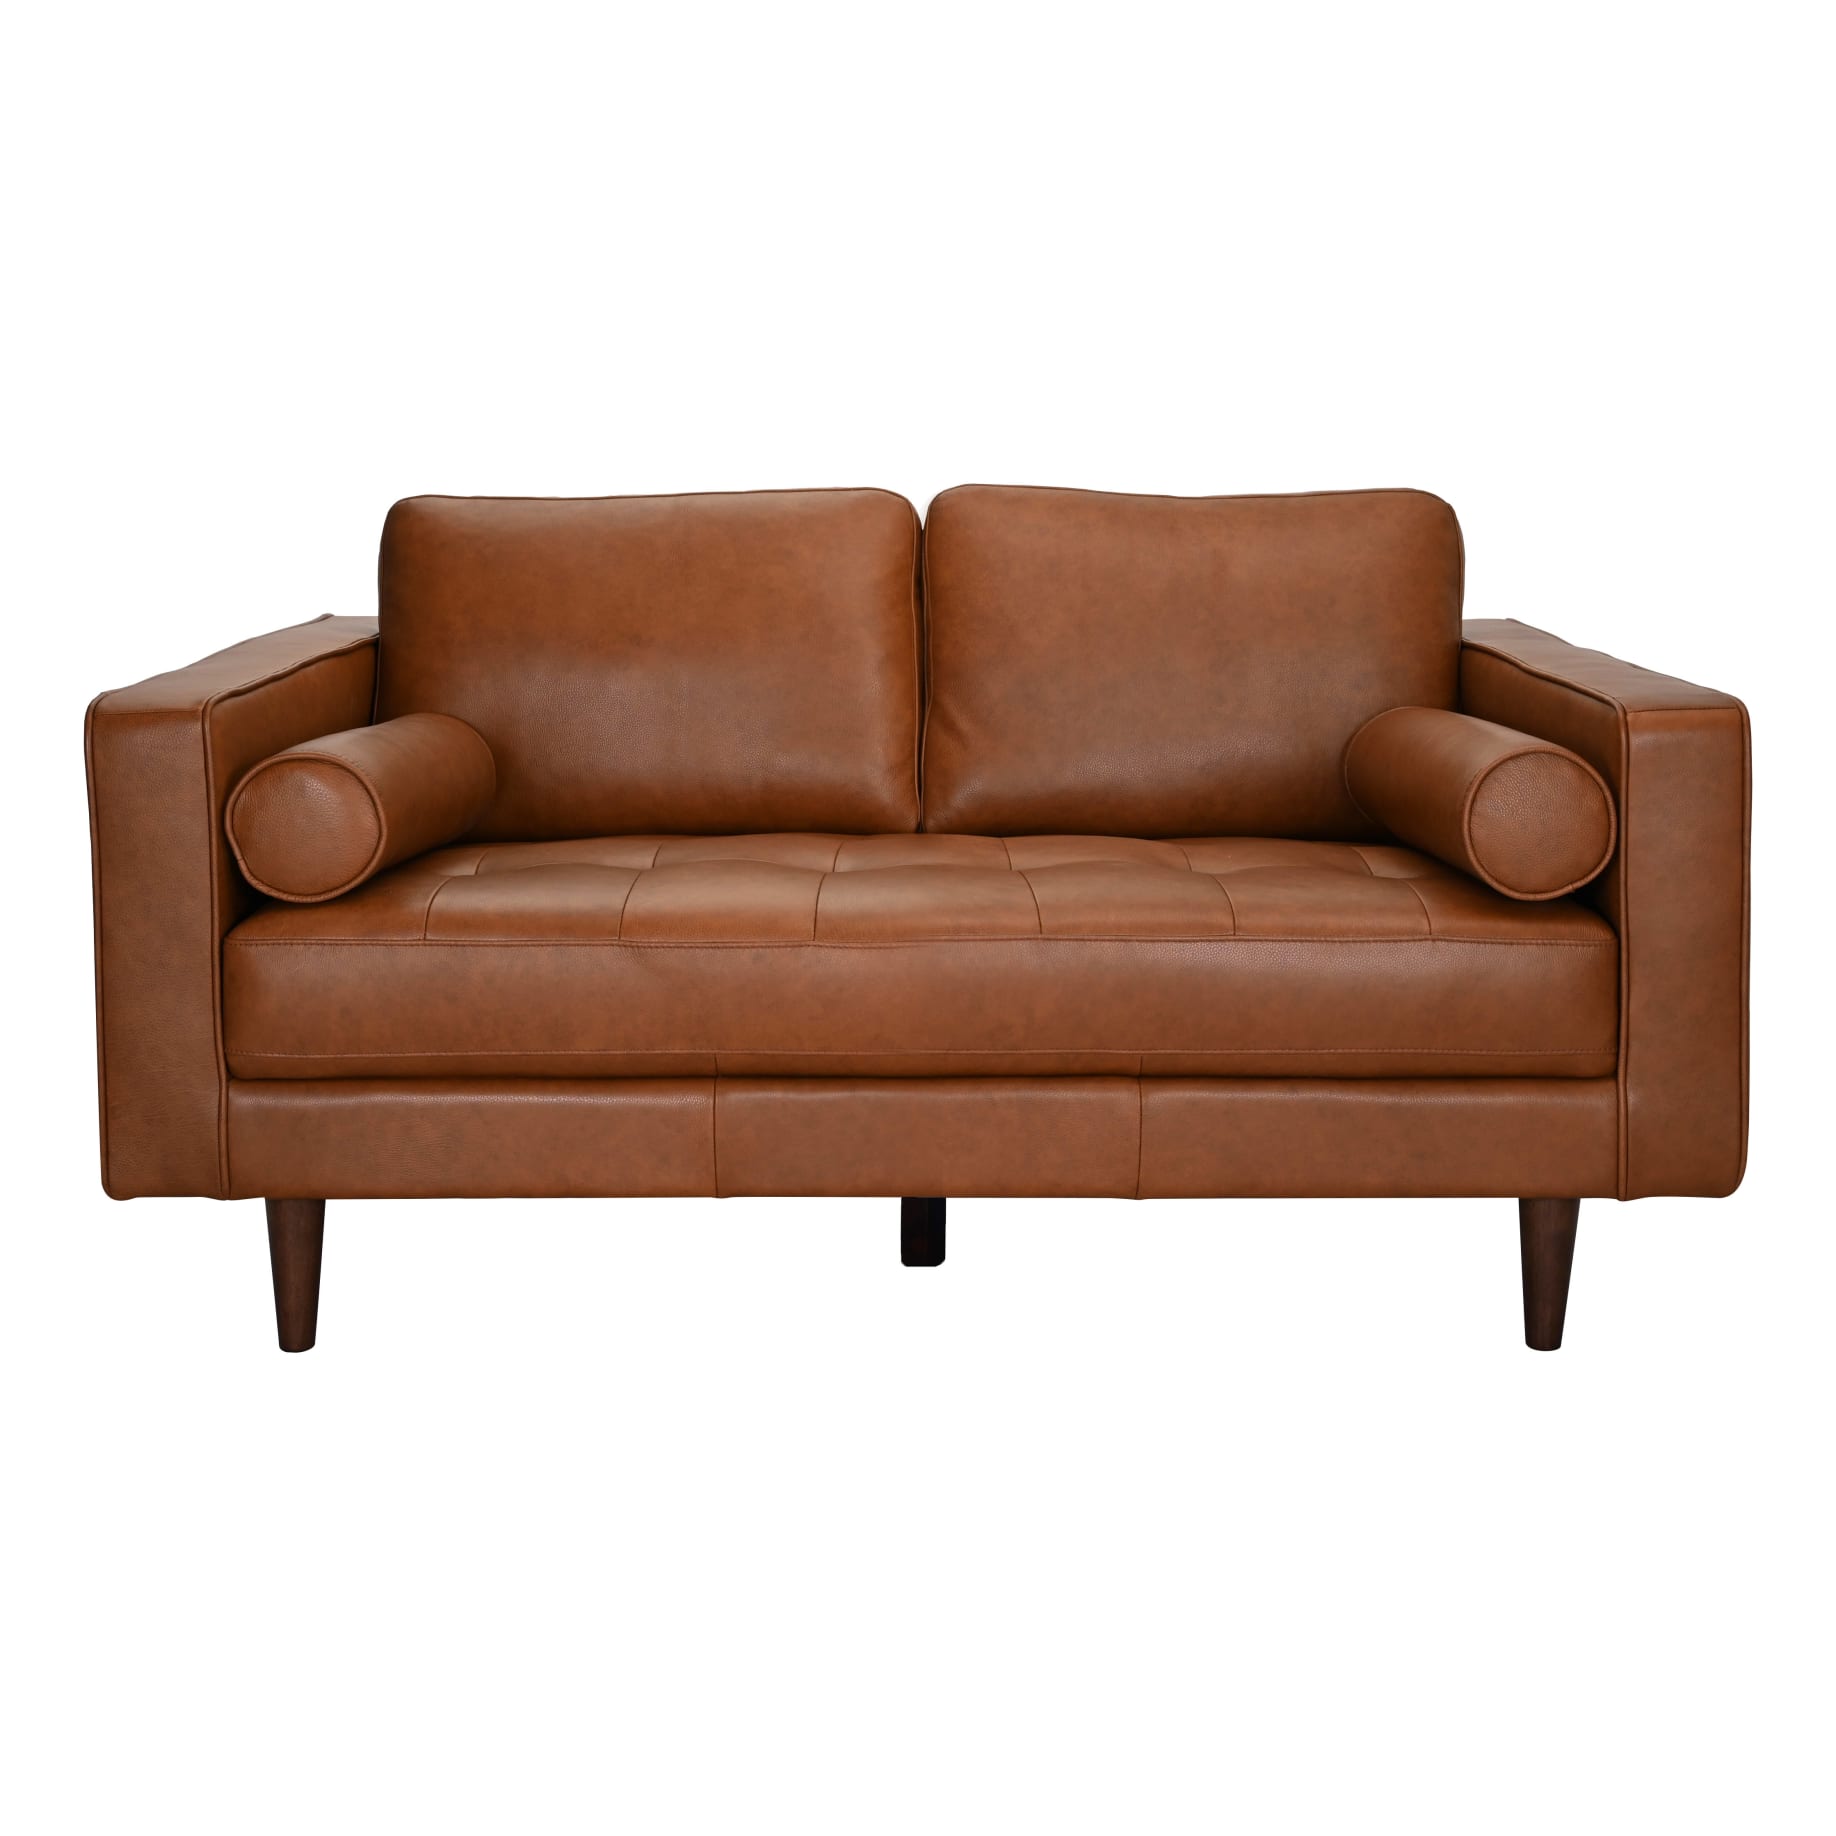 Kobe 2 Seater Sofa in Missouri Leather Brown